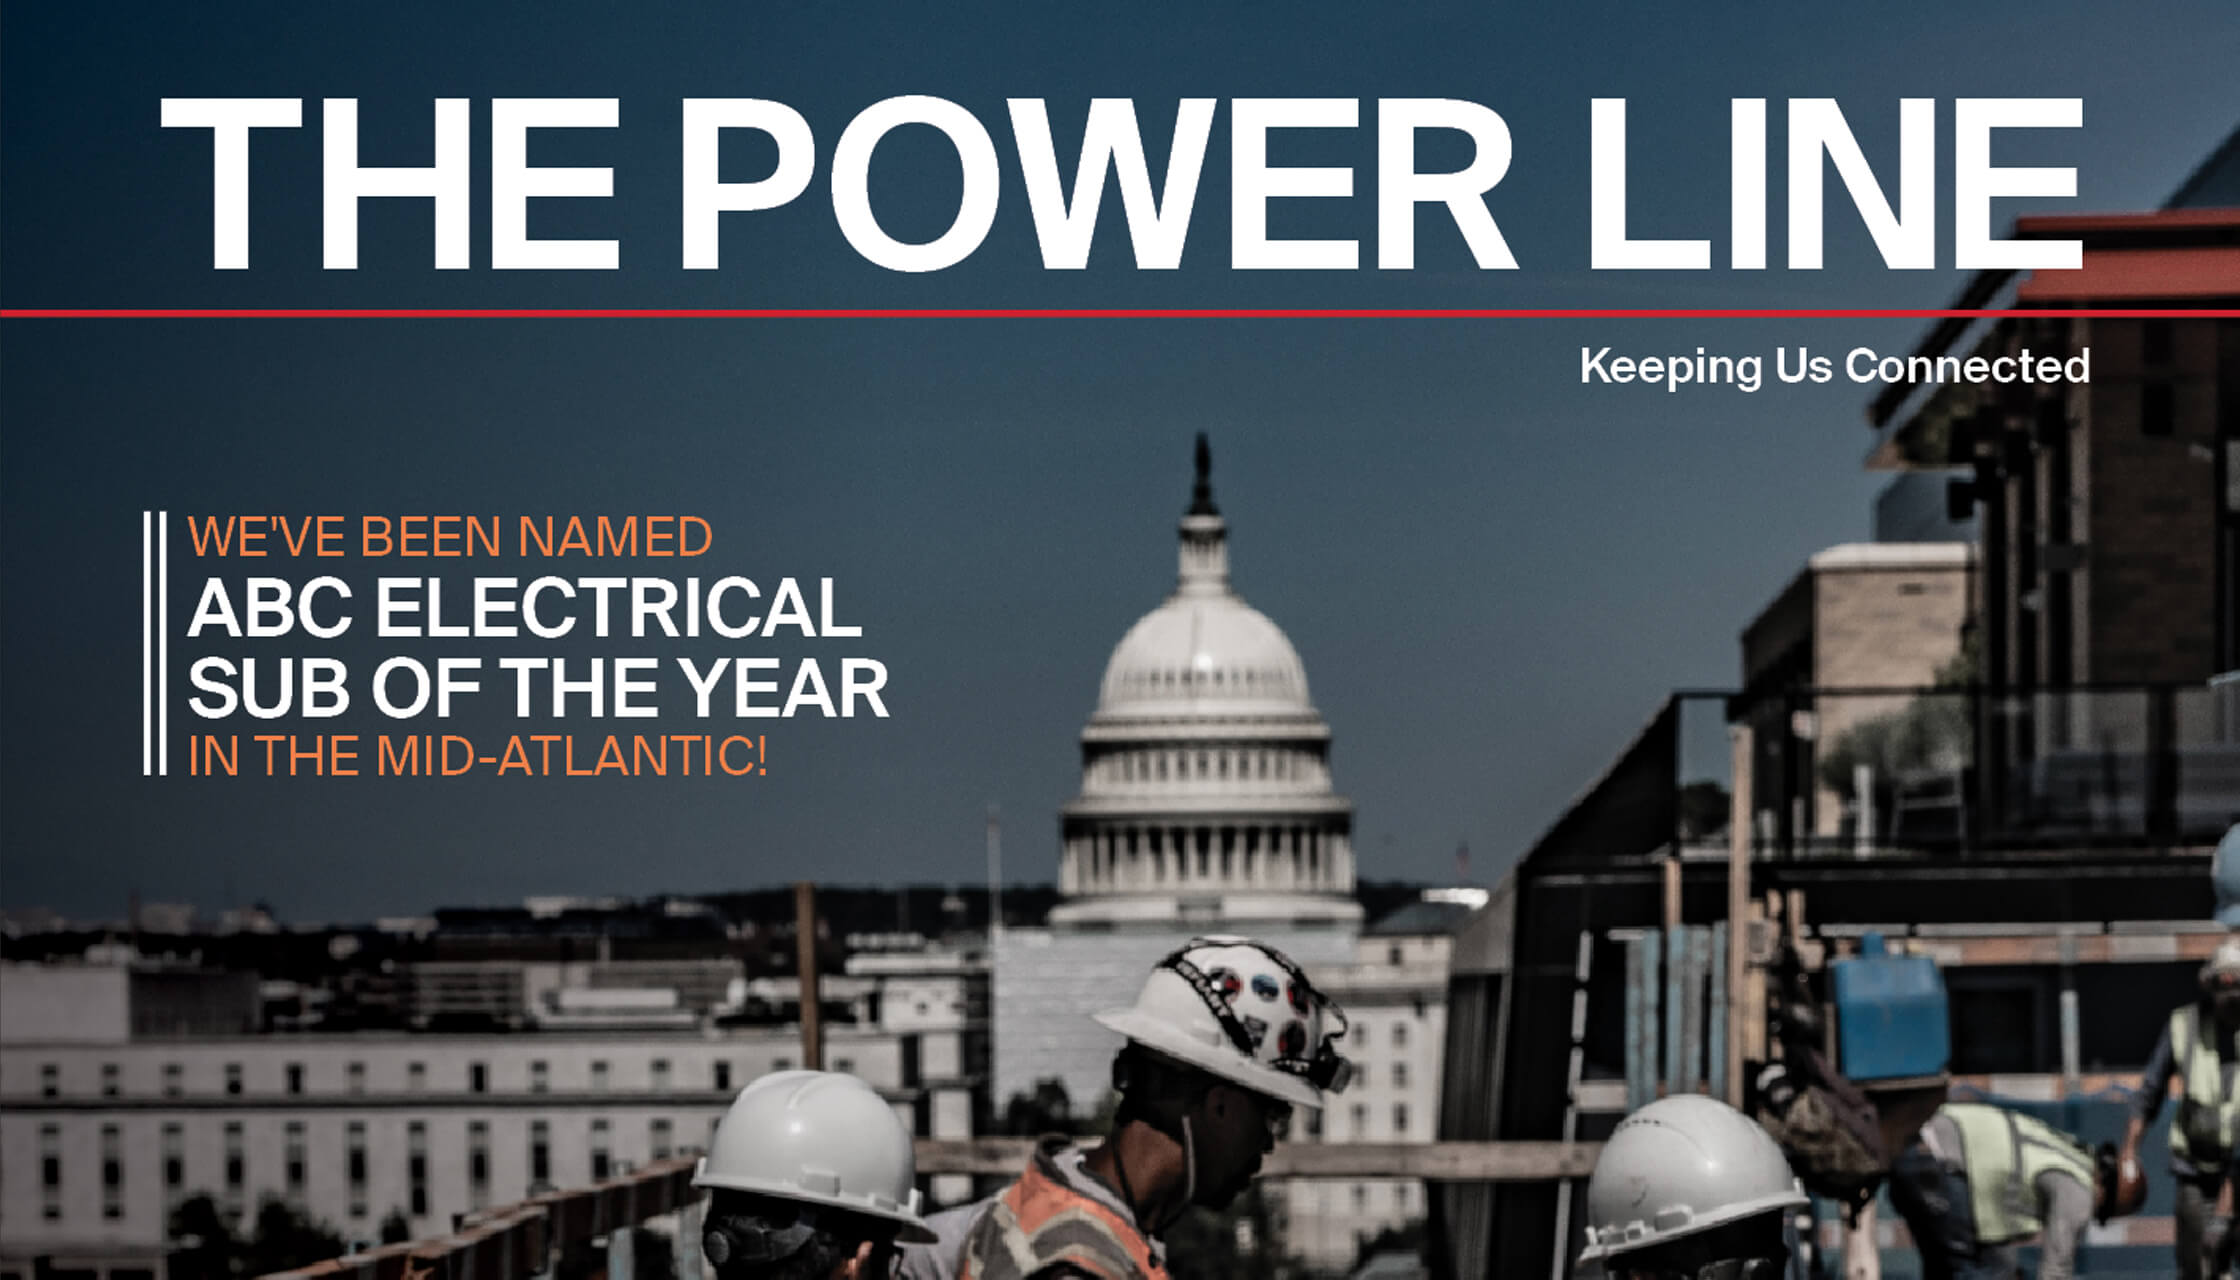 Power Line Newsletter Issue 3, 2019